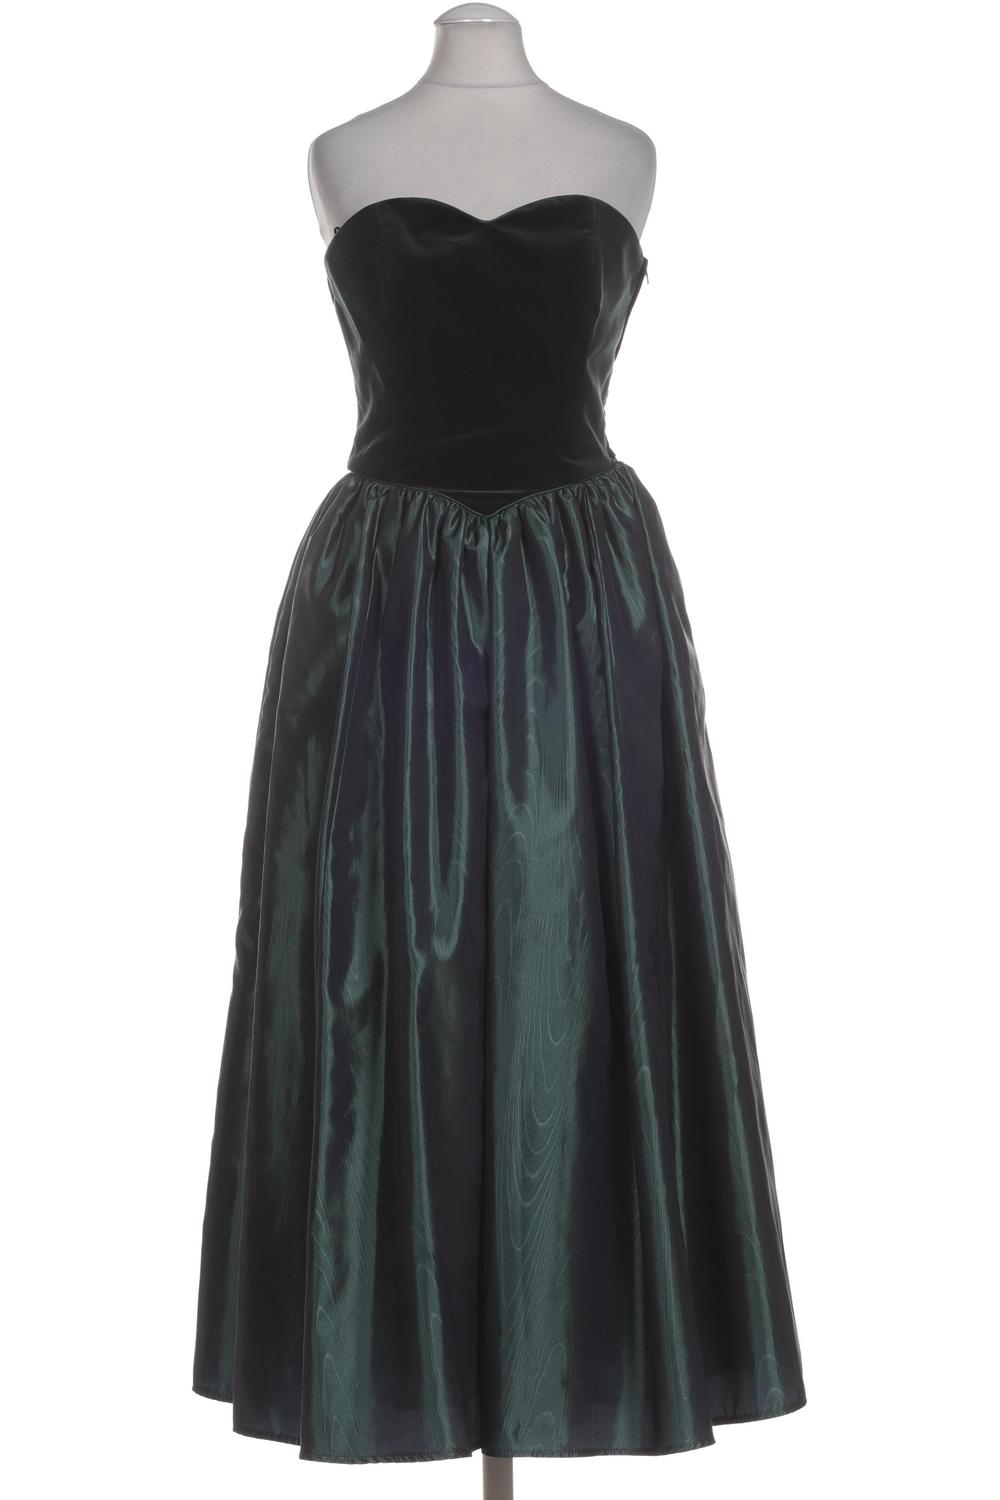 Laura Ashley Kleid Damen Dress Damenkleid Gr. EUR 38 (DE ...